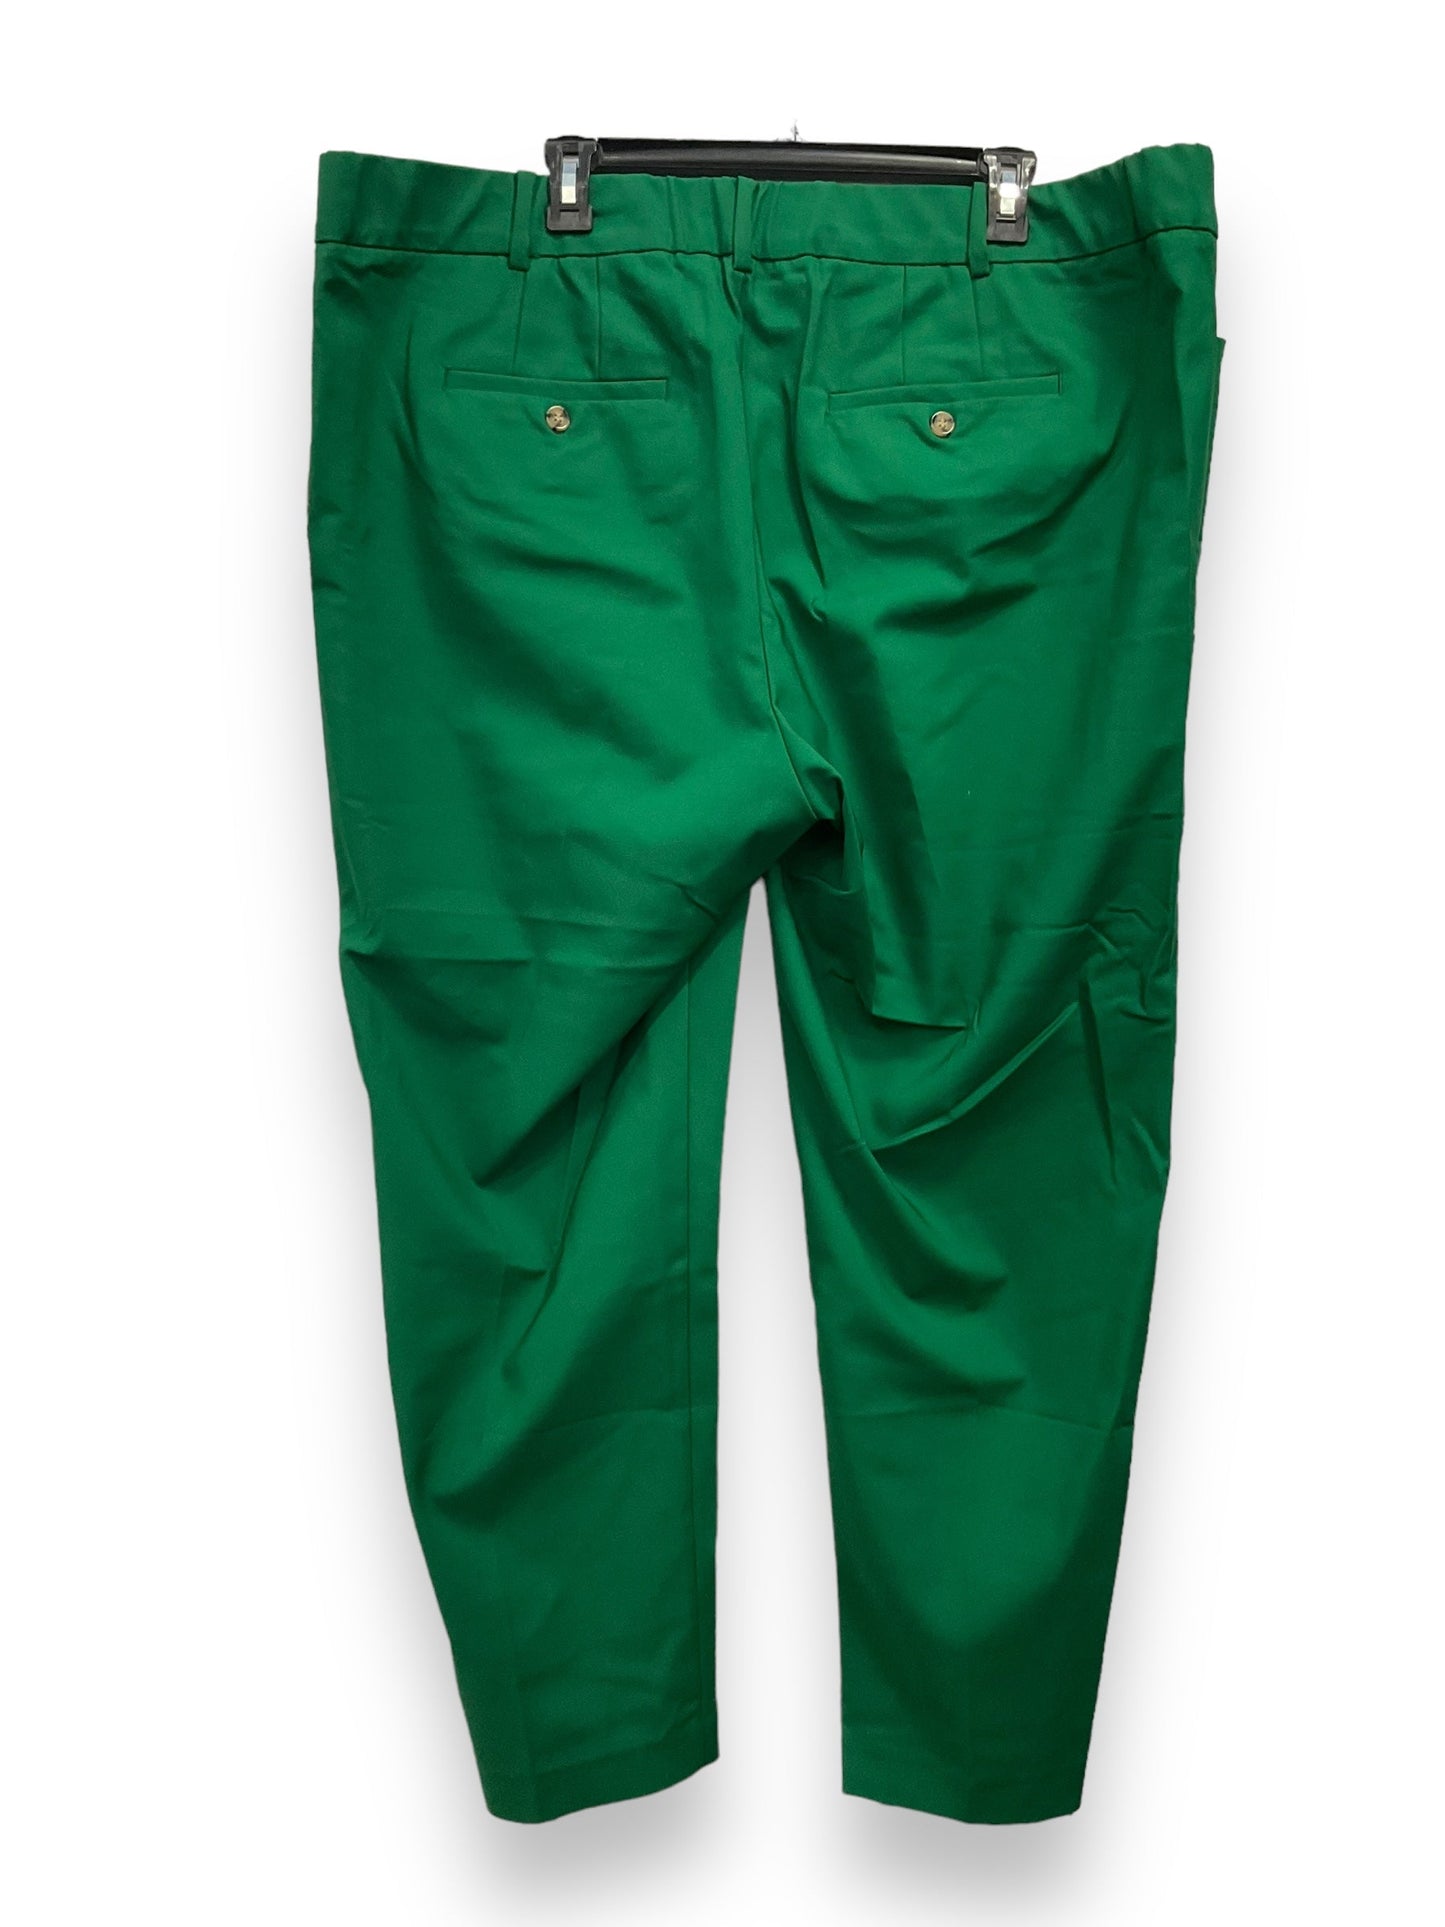 Green Pants Dress Eloquii, Size 20